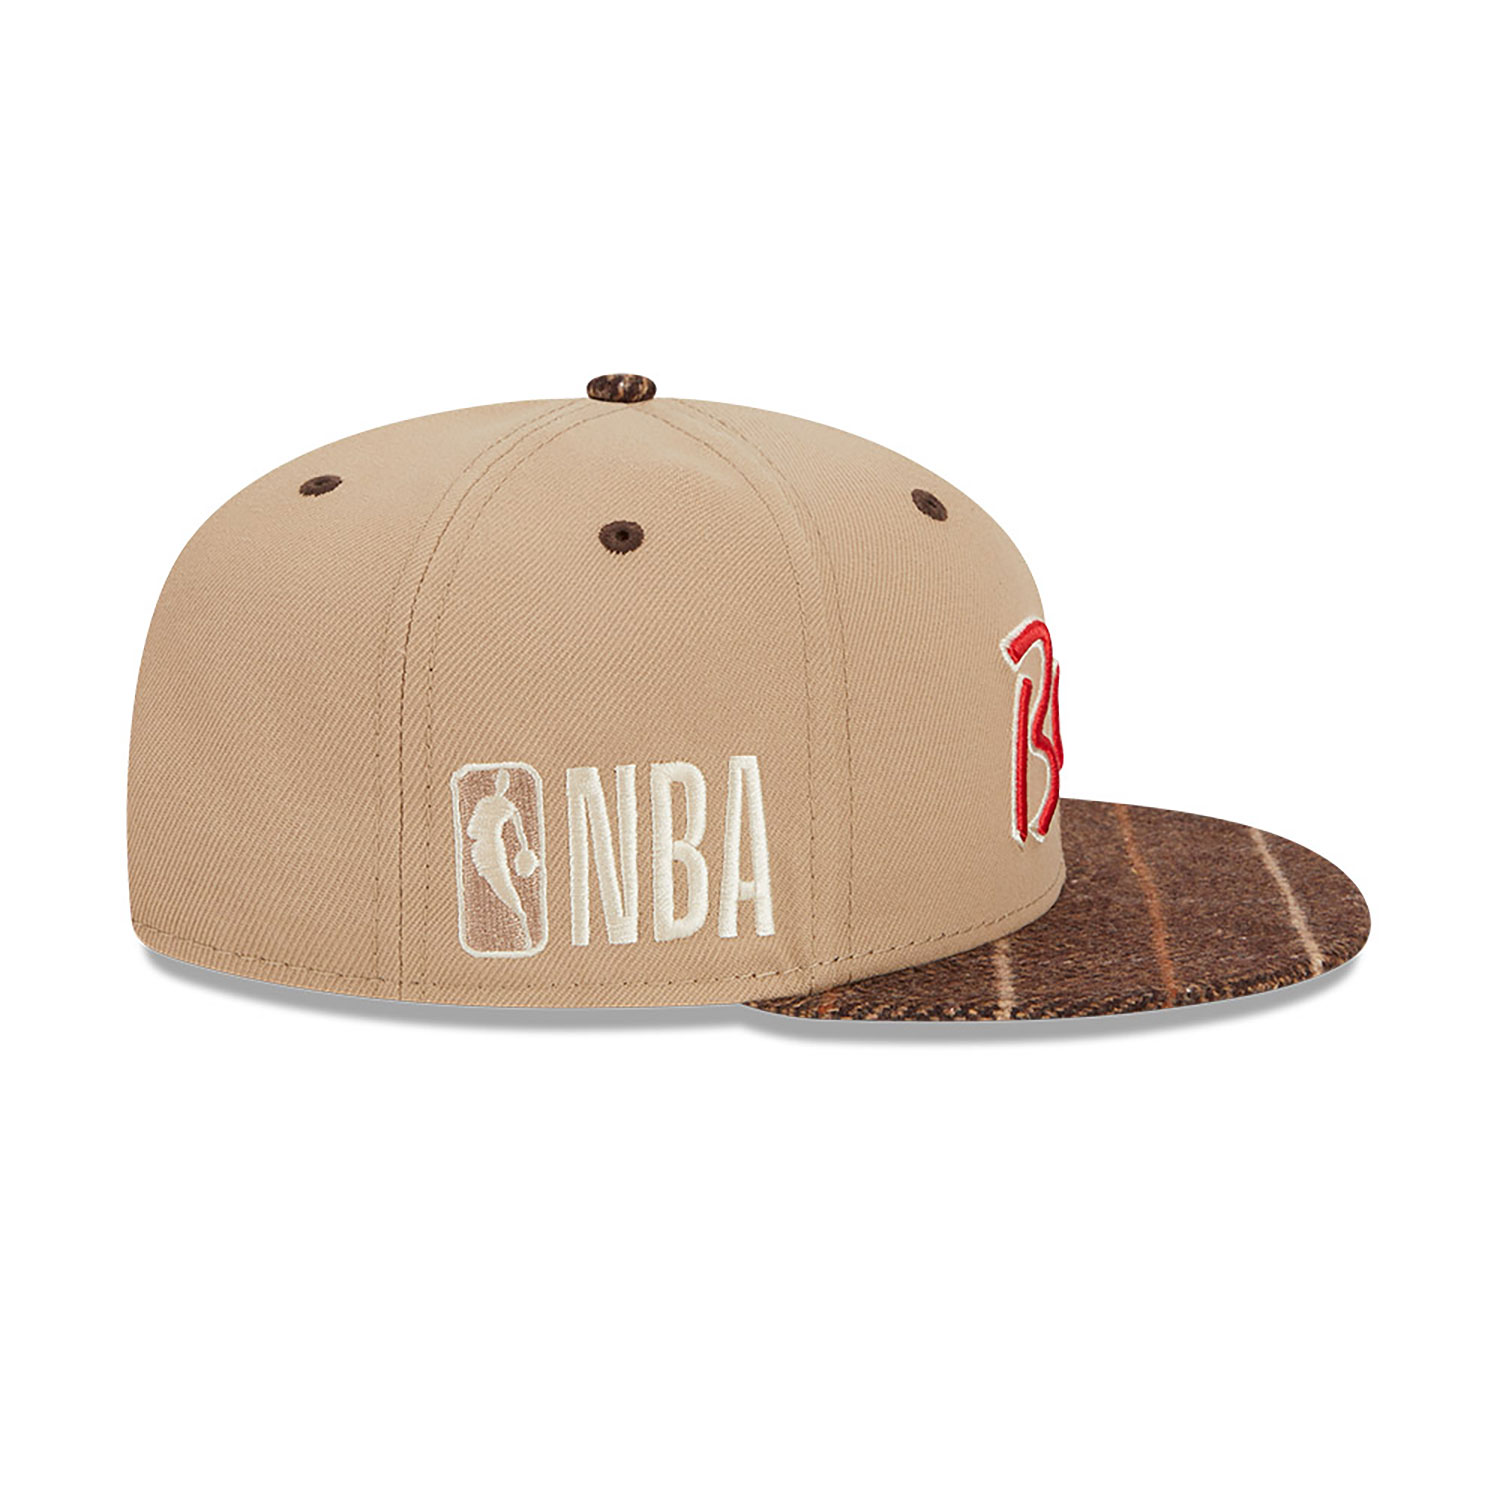 Chicago Bulls NBA Traditional Check Brown 9FIFTY Snapback Cap